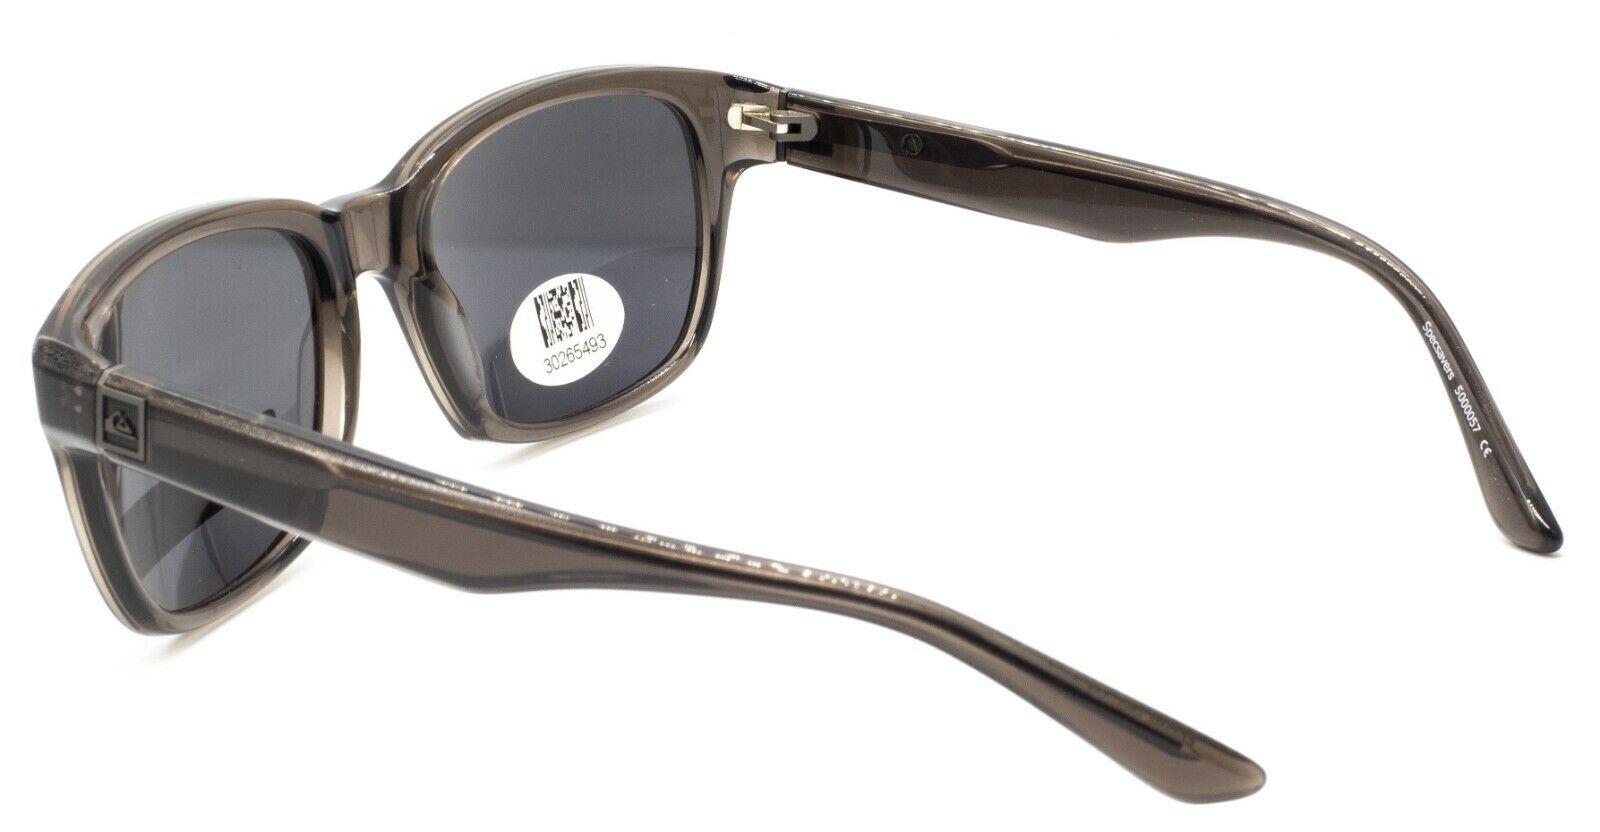 QUIKSILVER QS Sun Rx 101 30265493 55mm Sunglasses Shades Glasses Eyewear -  New - GGV Eyewear